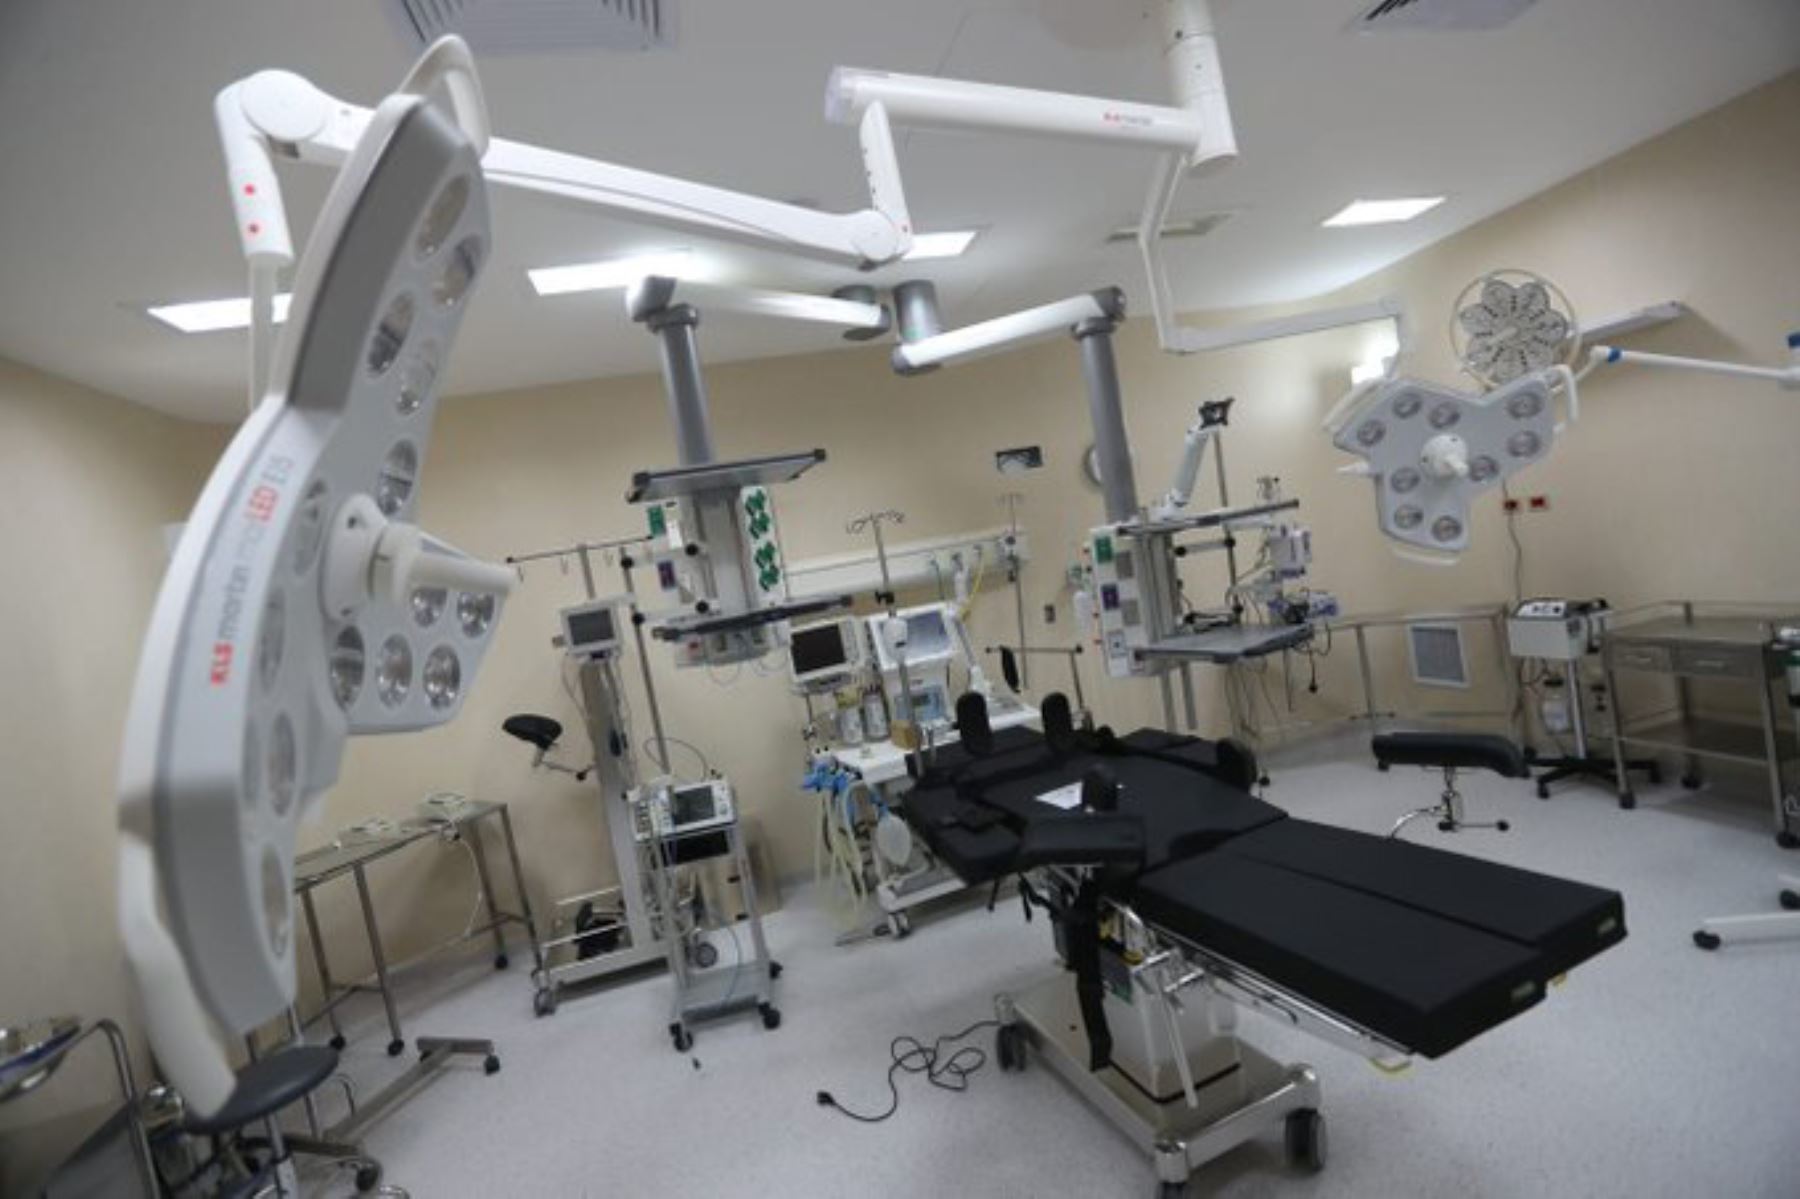 Nuevo hospital de Macusani contará con telemedicina e historias clínicas electrónicas. INTERNET/Medios